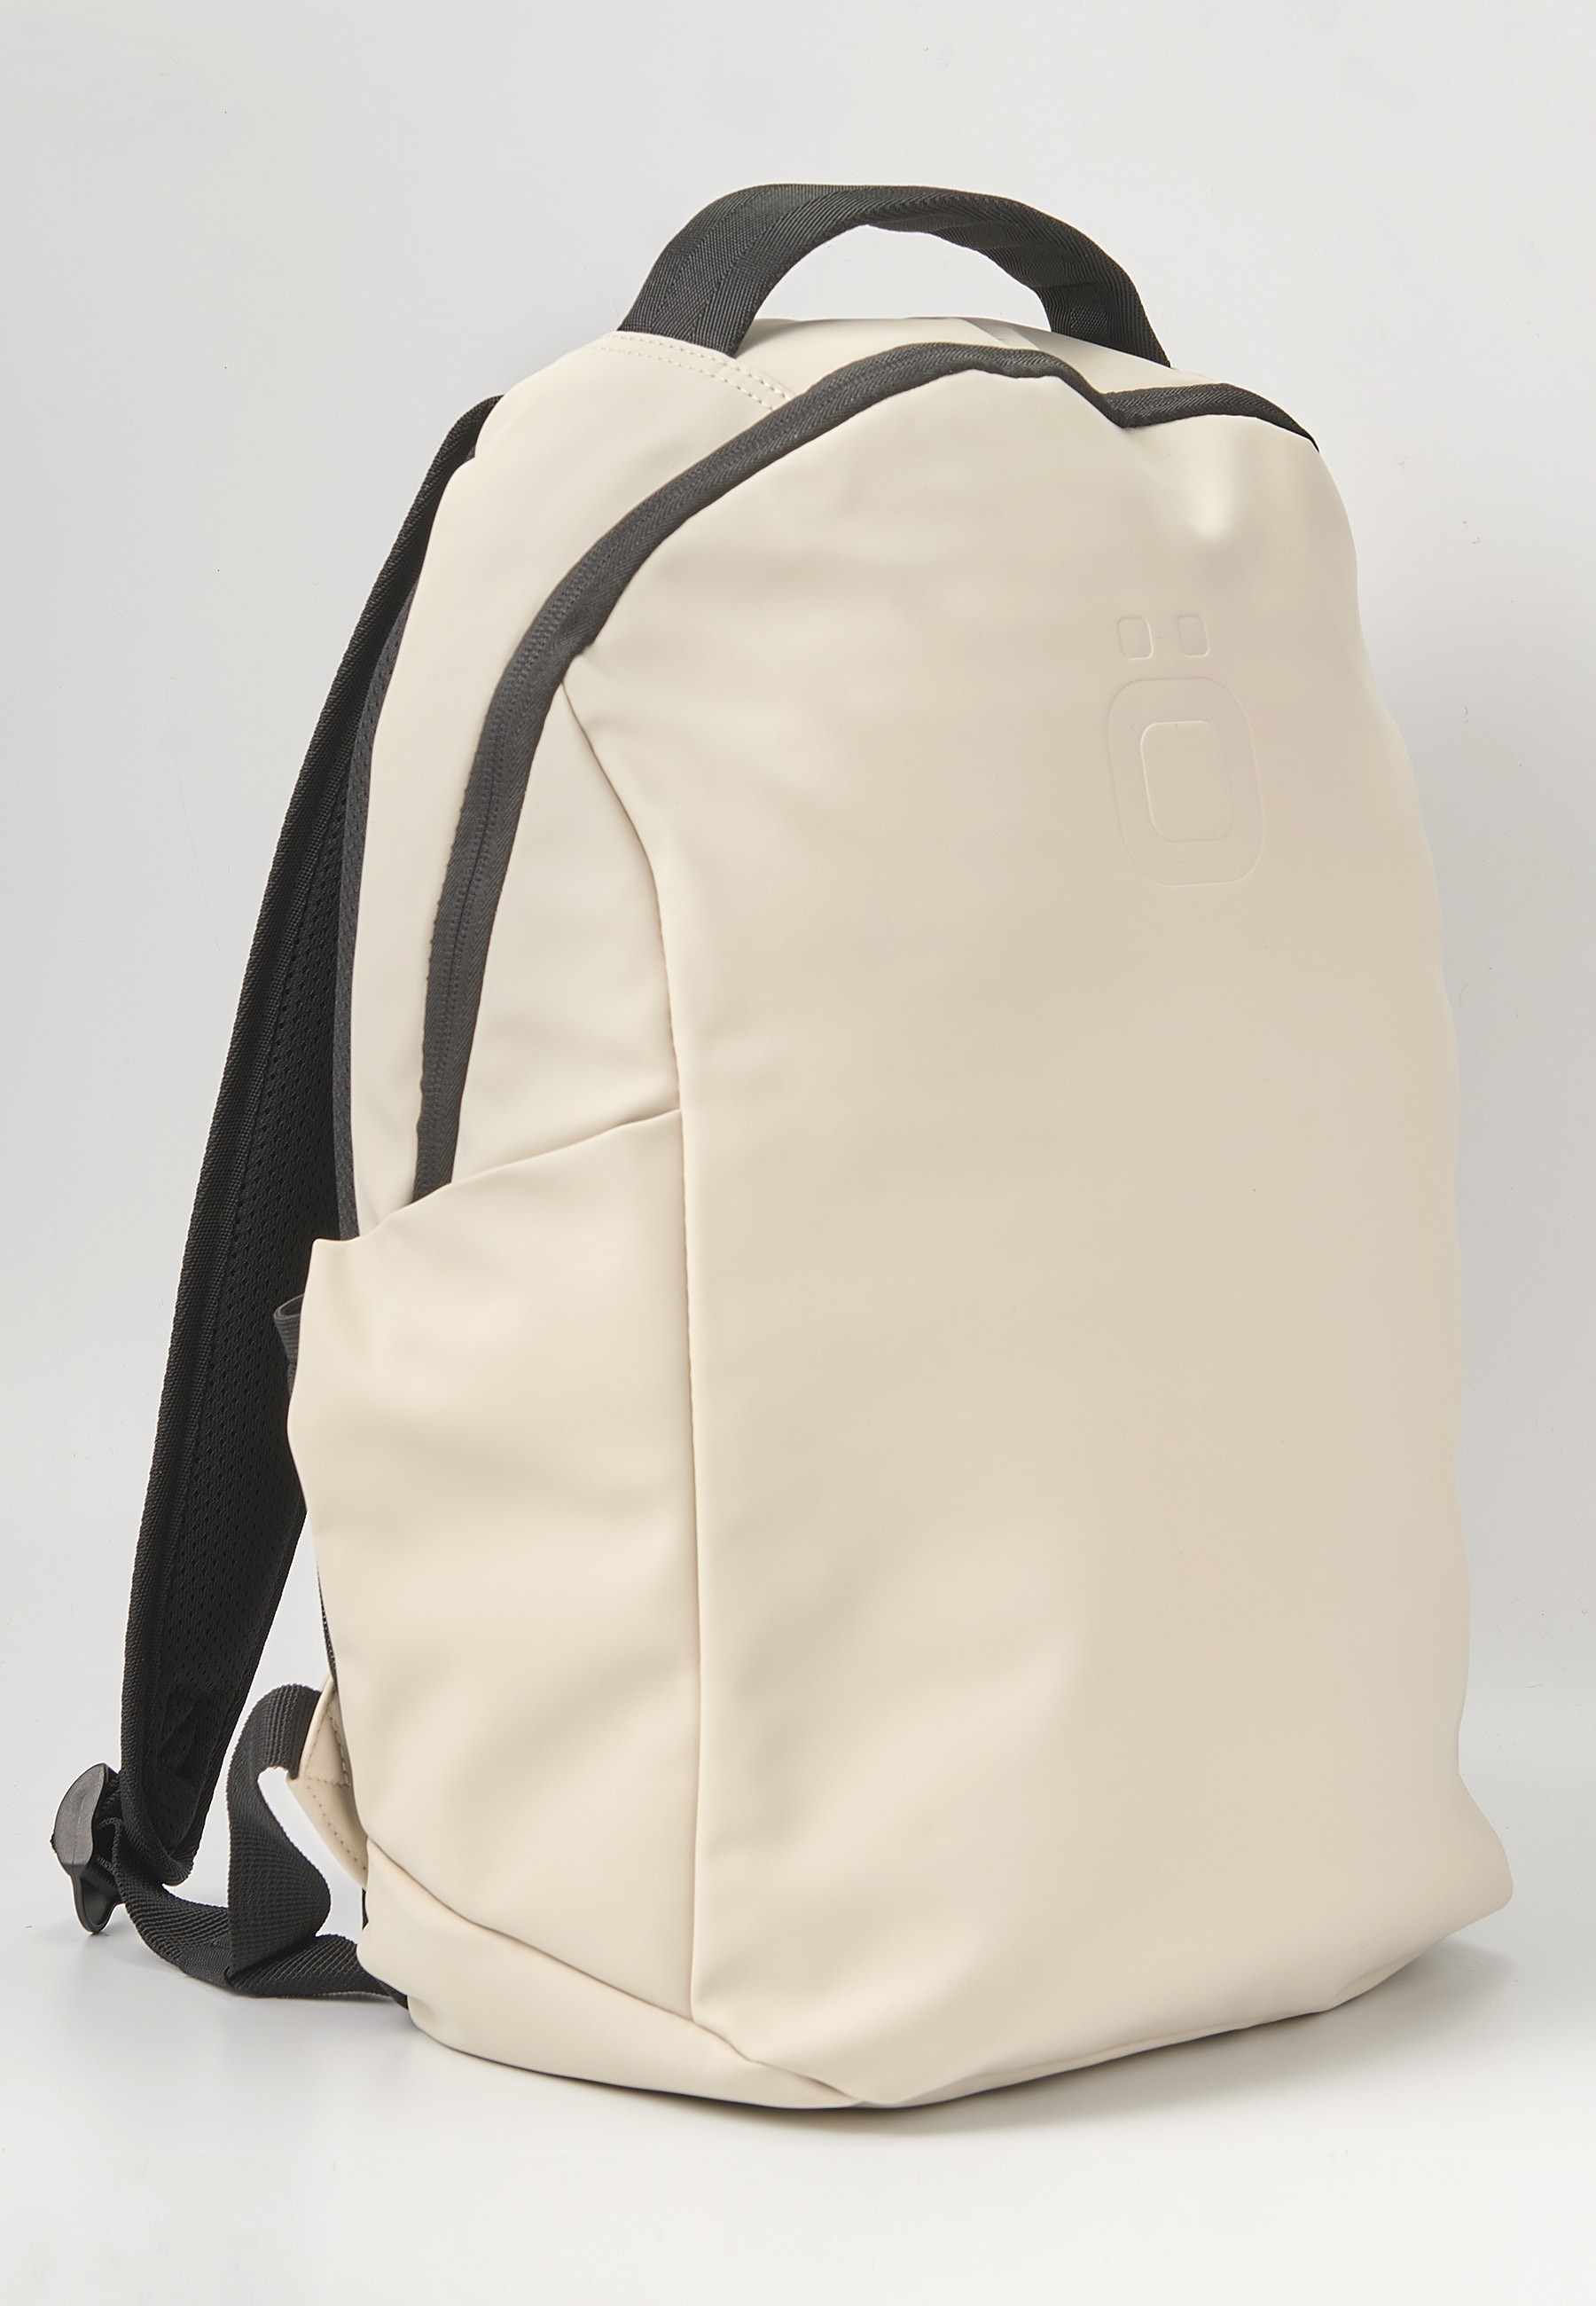 Koröshi Backpack with zipper closure and interior laptop pocket in Ecru color